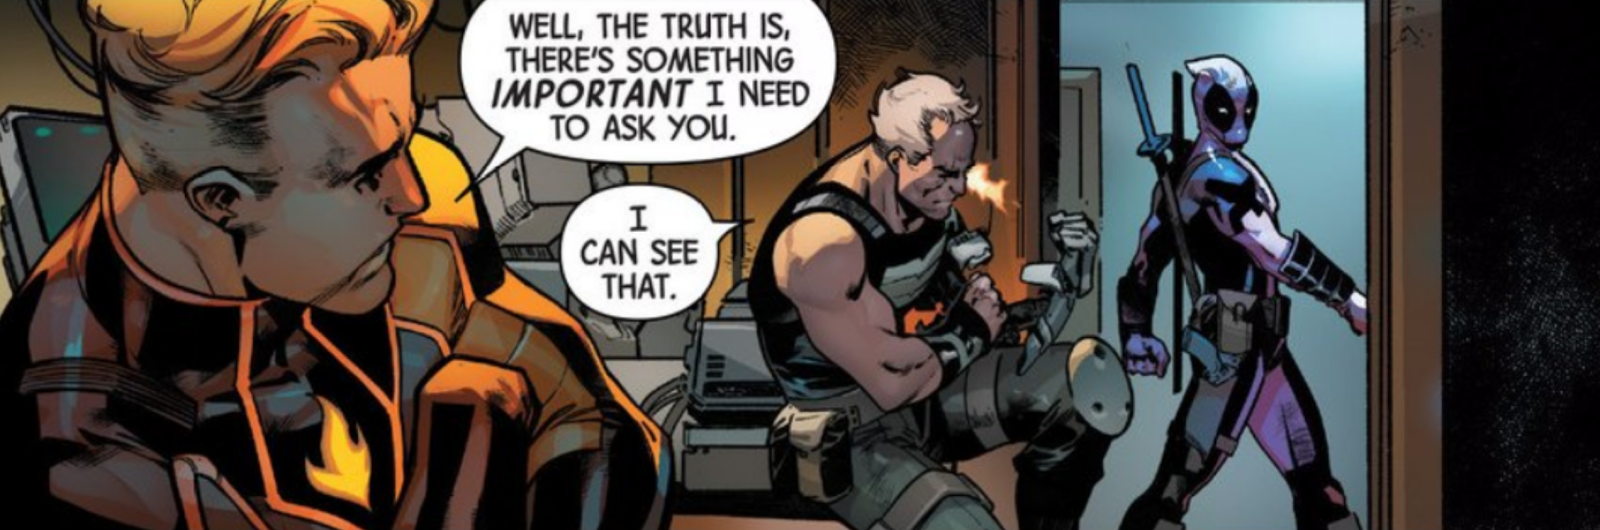 Deadpool Asks The Important Questions